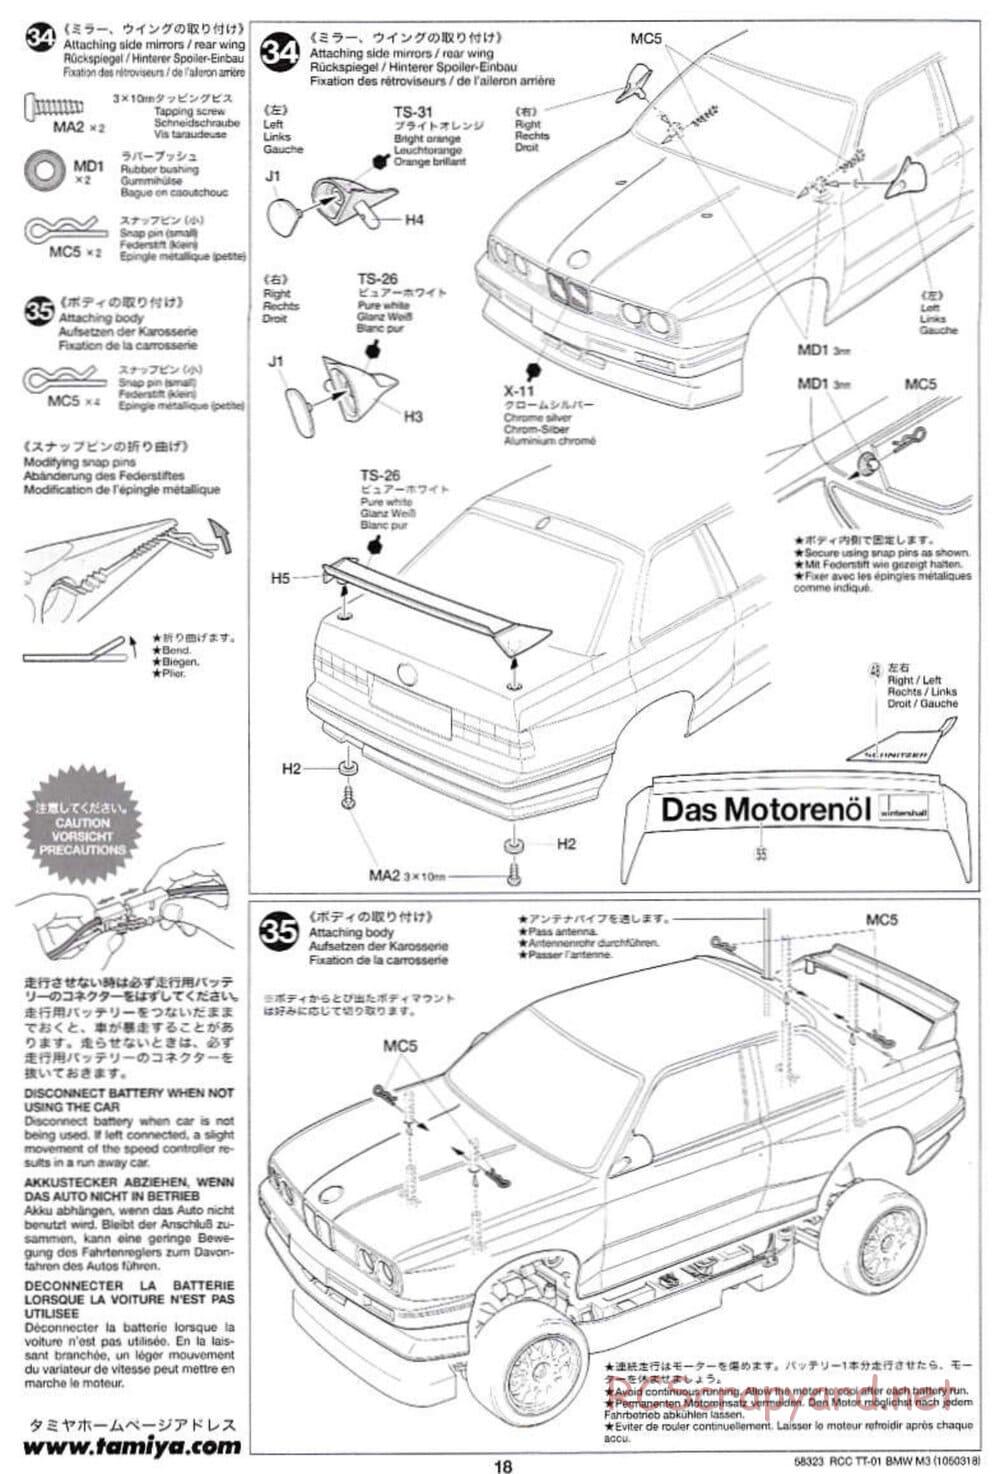 Tamiya - Schnitzer BMW M3 Sport Evo - TT-01 Chassis - Manual - Page 18